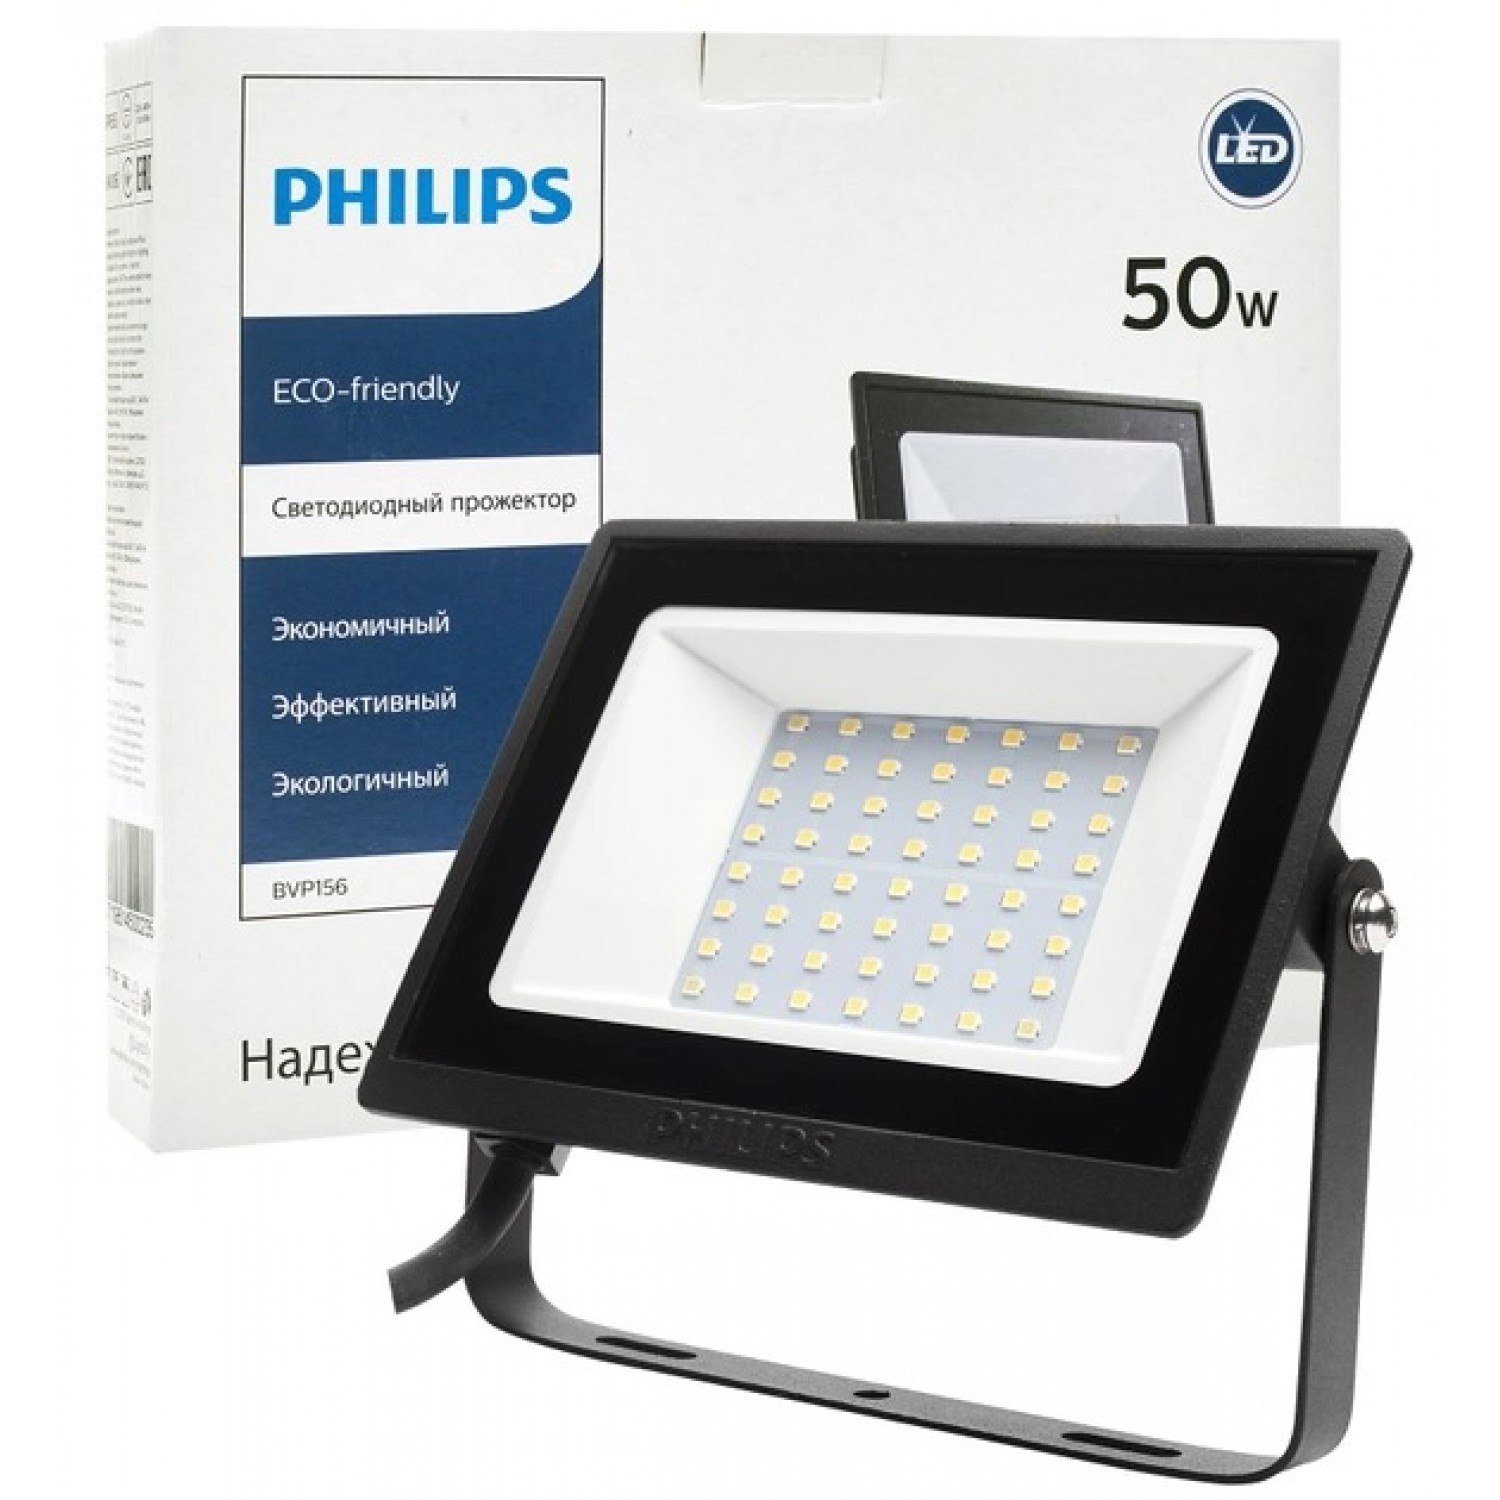 Прожектор Philips BVP156 LED40/CW 50W WB 911401829581